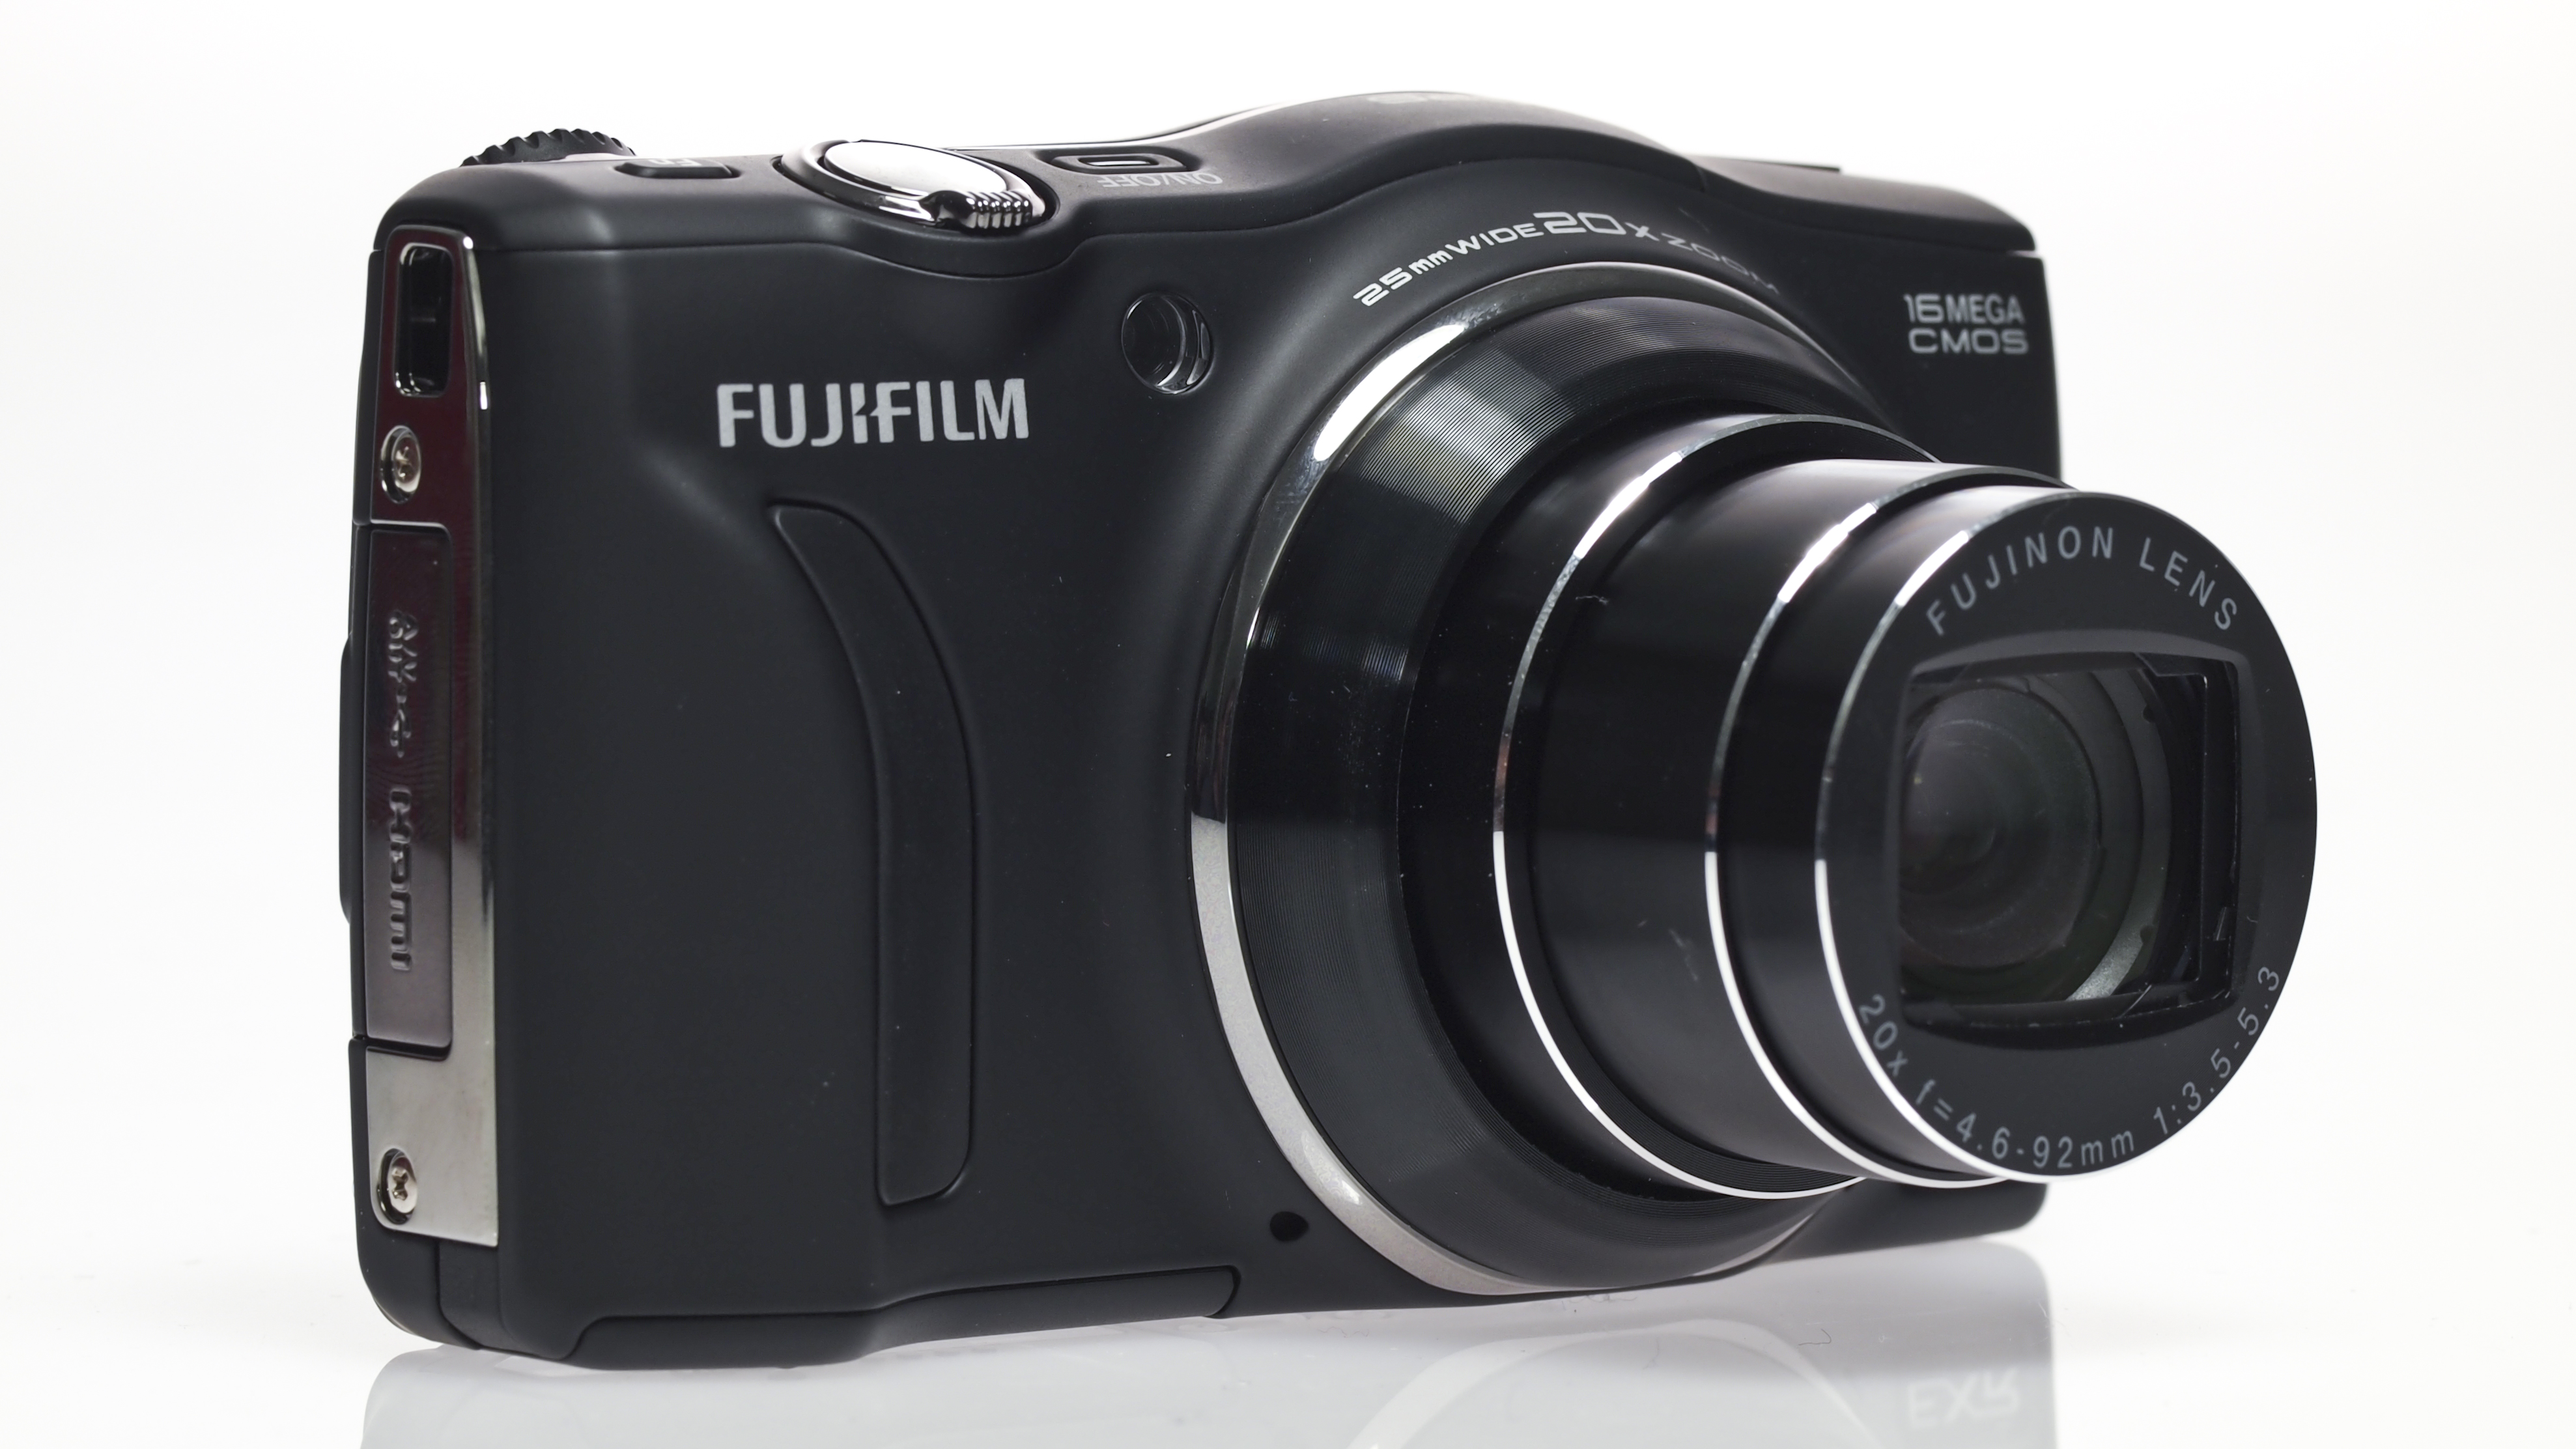 Gehoorzaamheid Interactie bagageruimte Fujifilm FinePix F770 EXR review | TechRadar